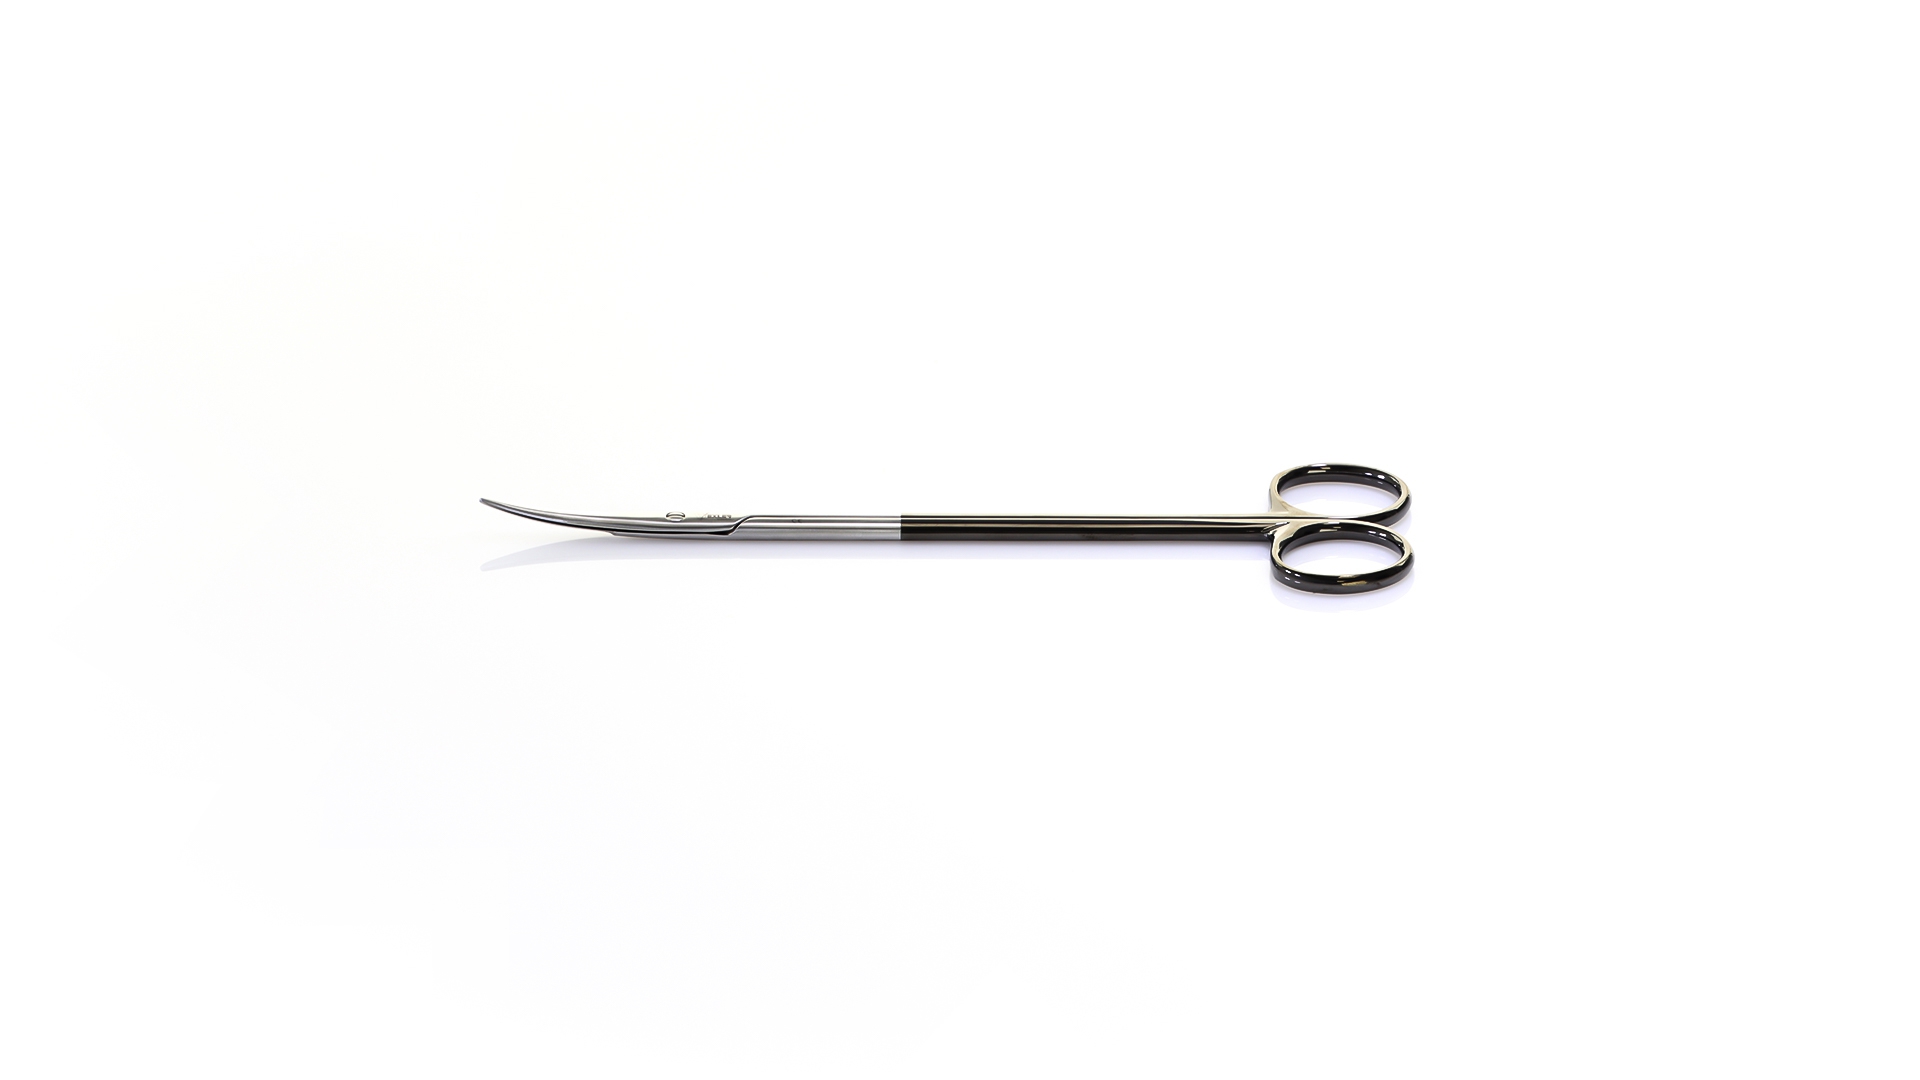 Metzenbaum Scissors - Curved Razor edge Blades w/Fine tips